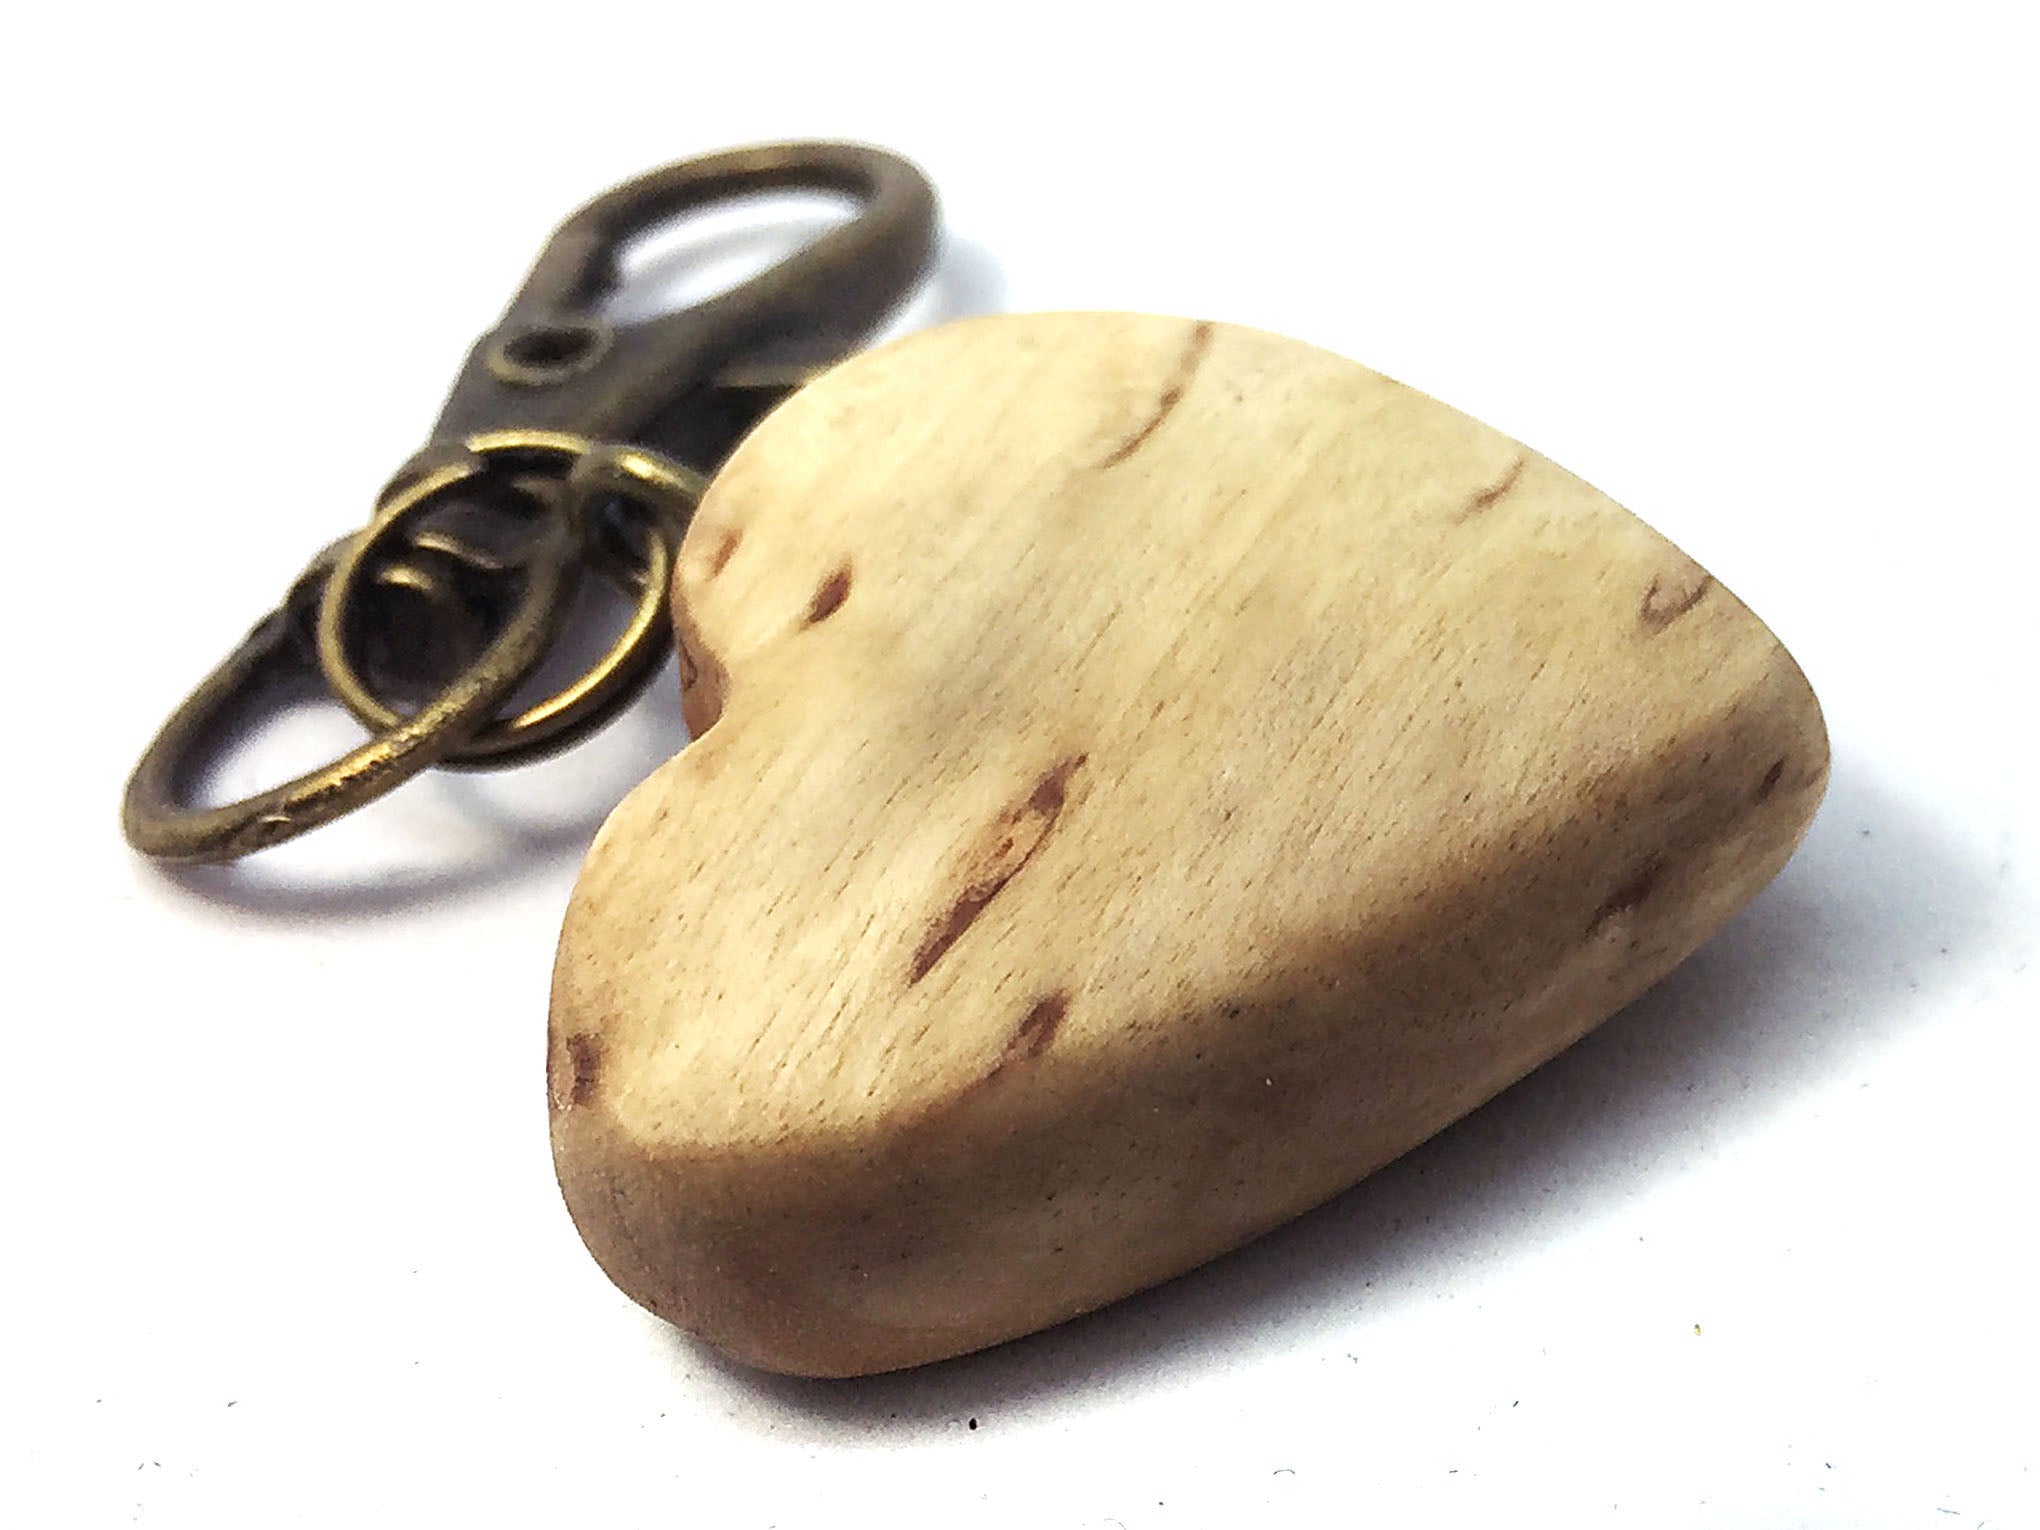 LV-4330 Masur Birch Wooden Heart Shaped Charm, Keychain, Wedding Favor-HAND CARVED